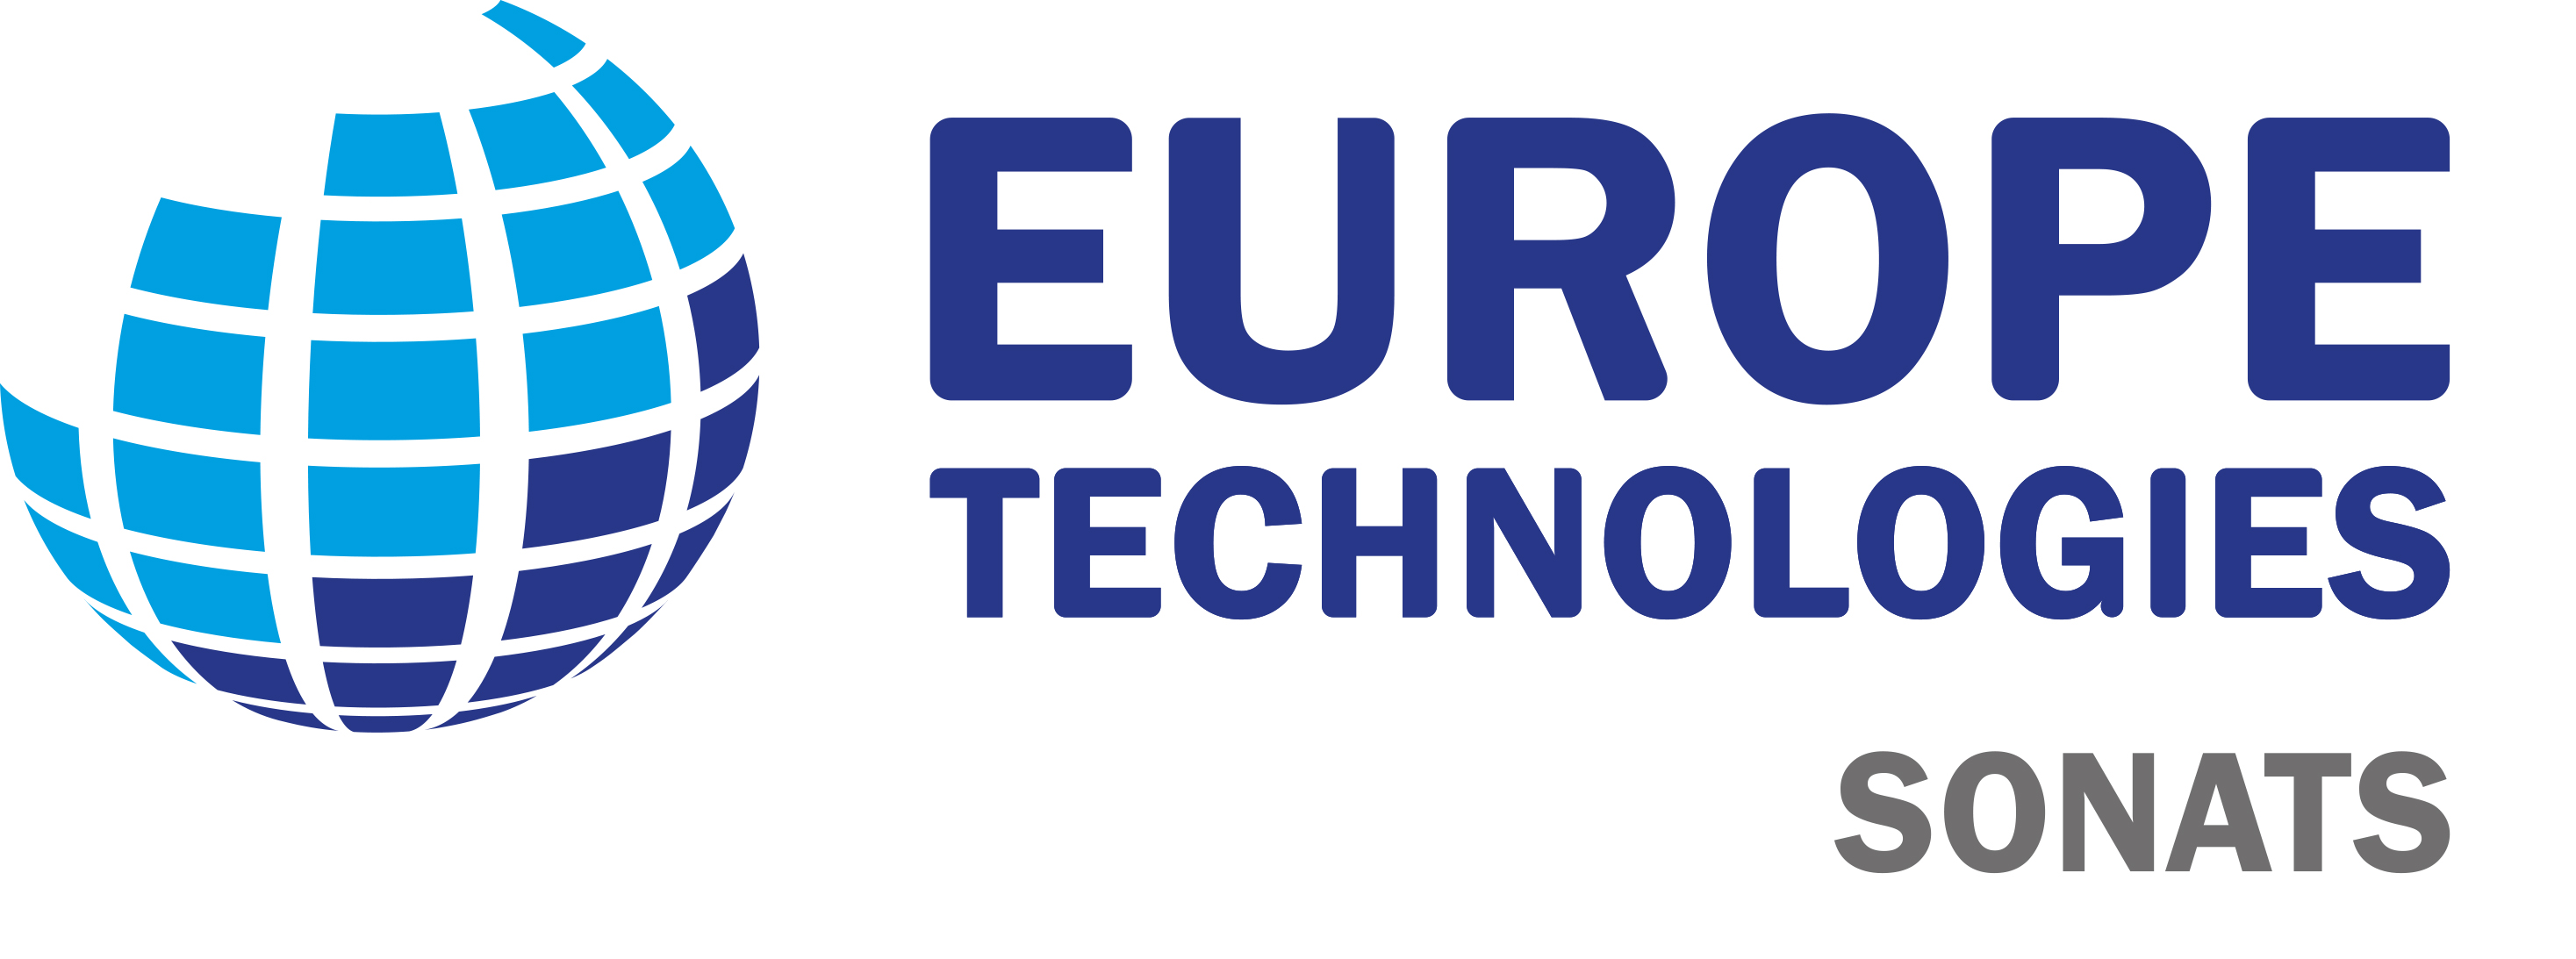 Europe Technologies / Sonats